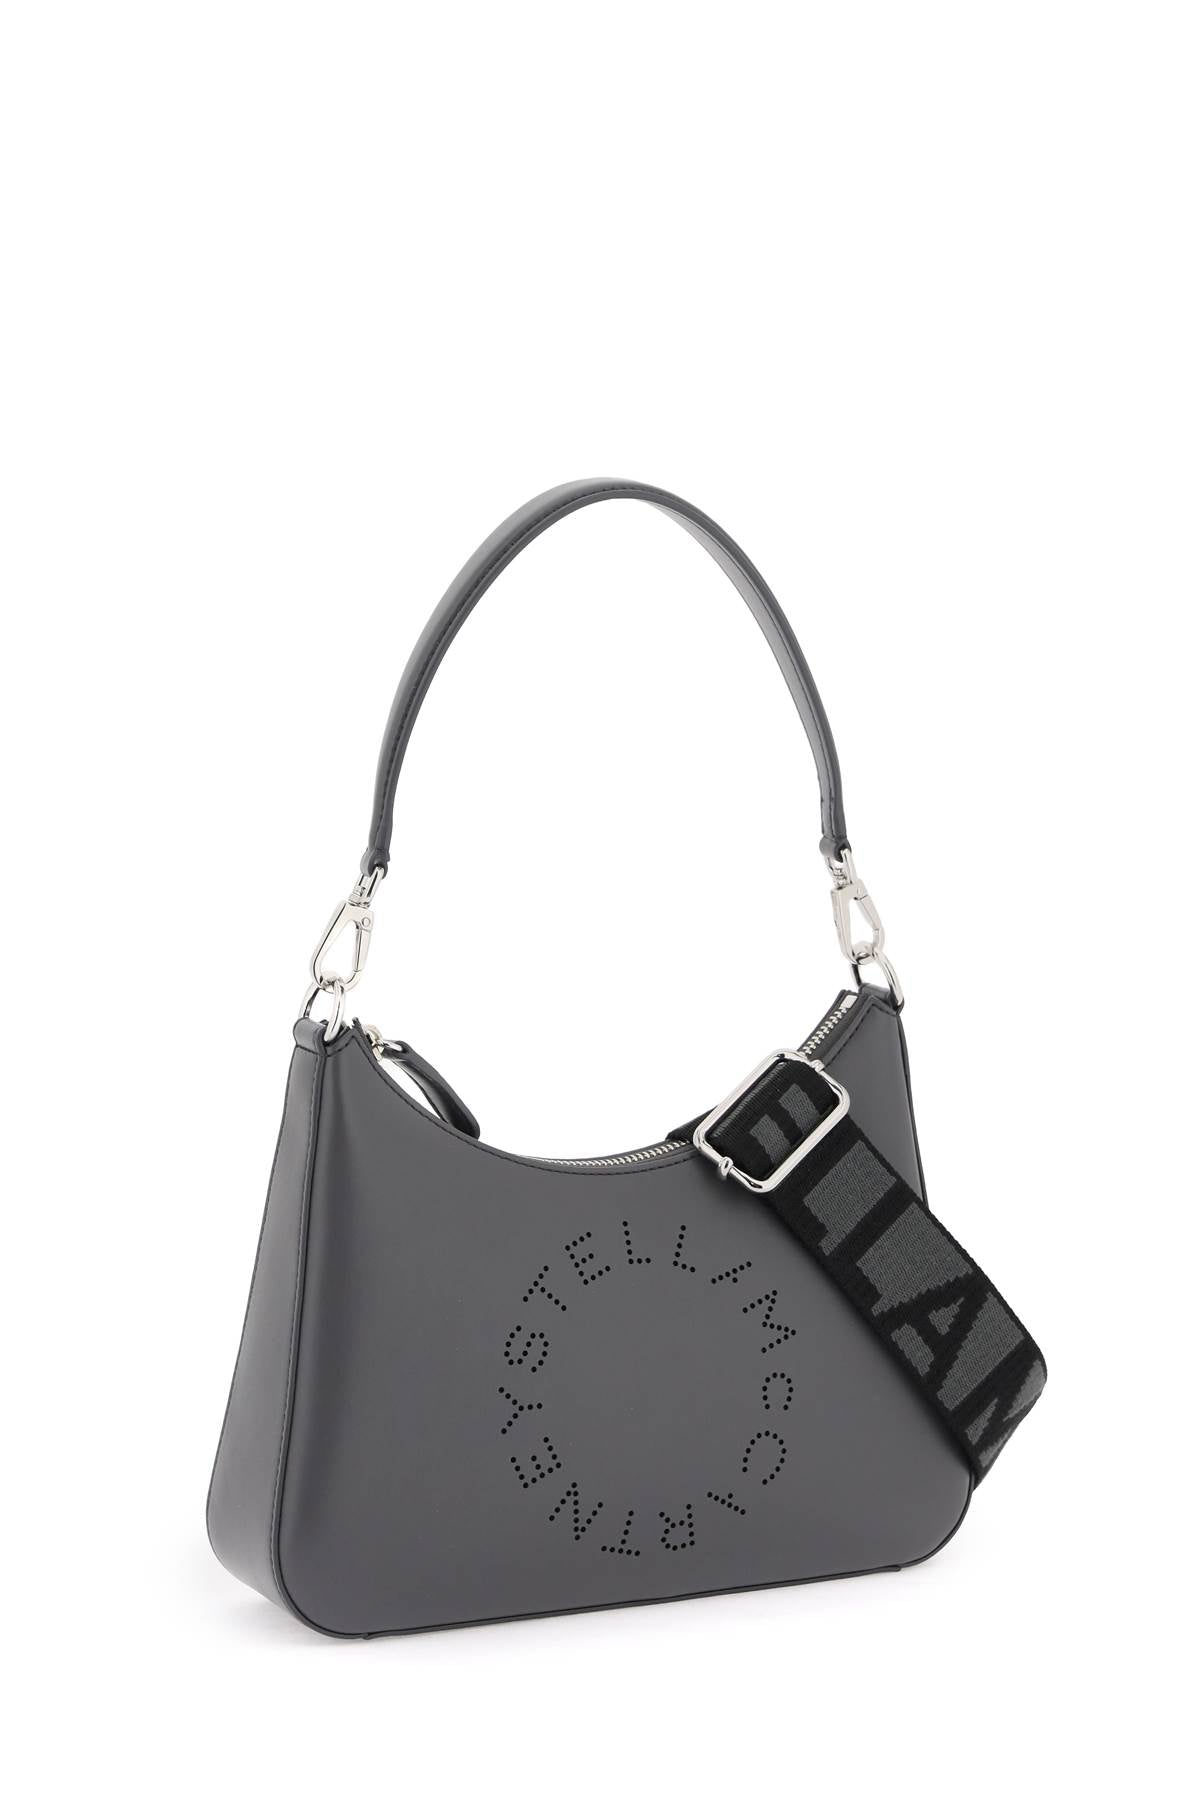 Stella mccartney small logo shoulder bag-2